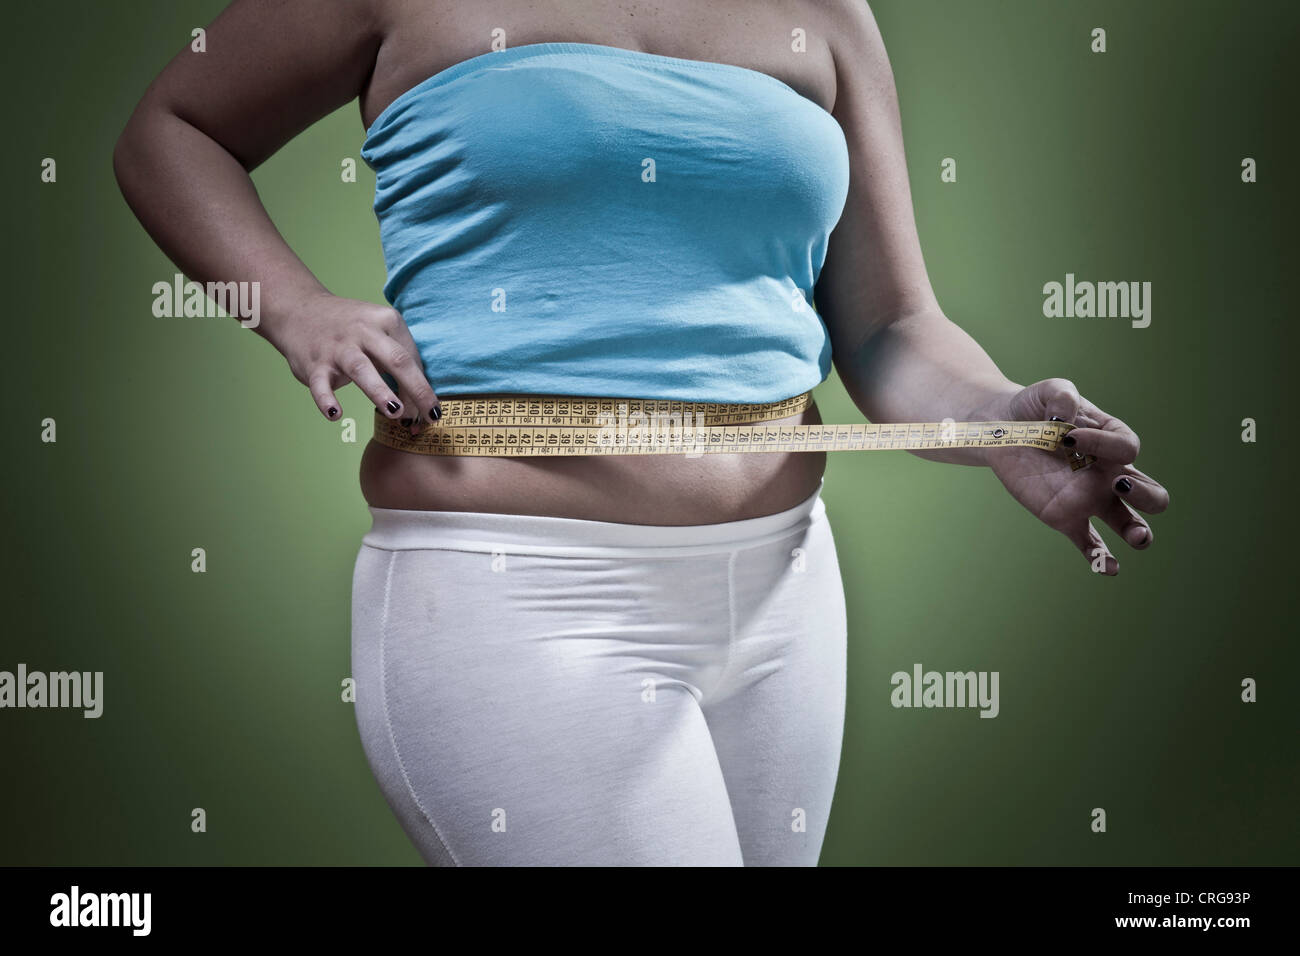 Woman measuring her waistline Stock Photo